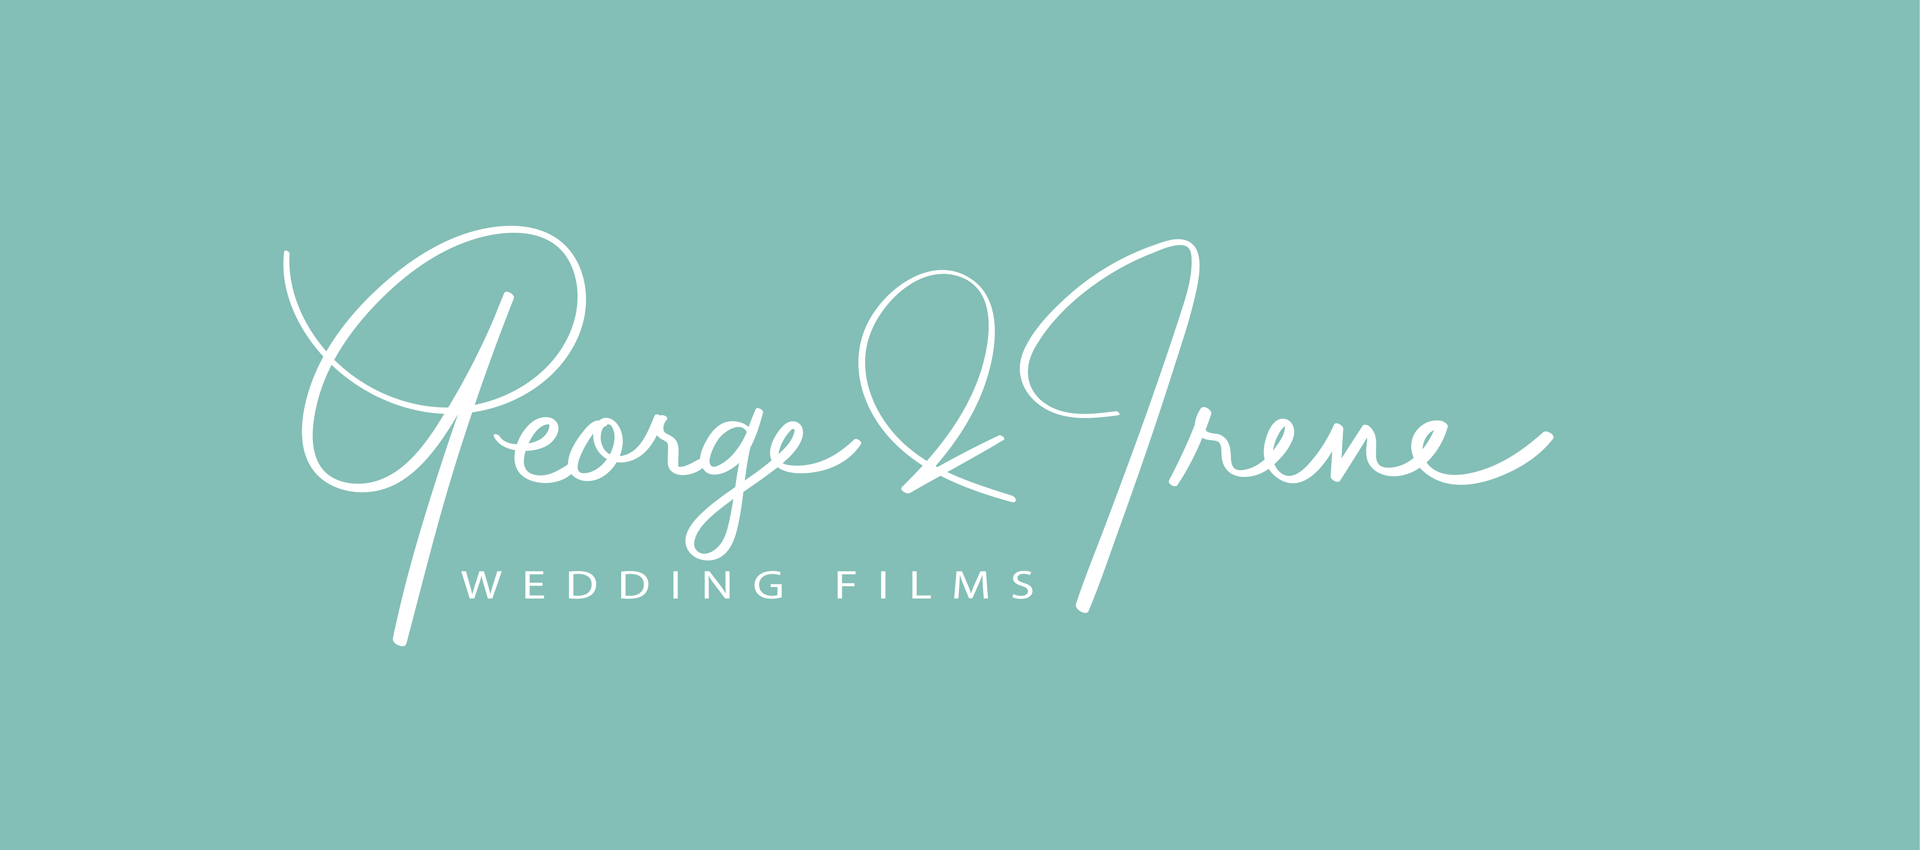 George & Irene Wedding Films